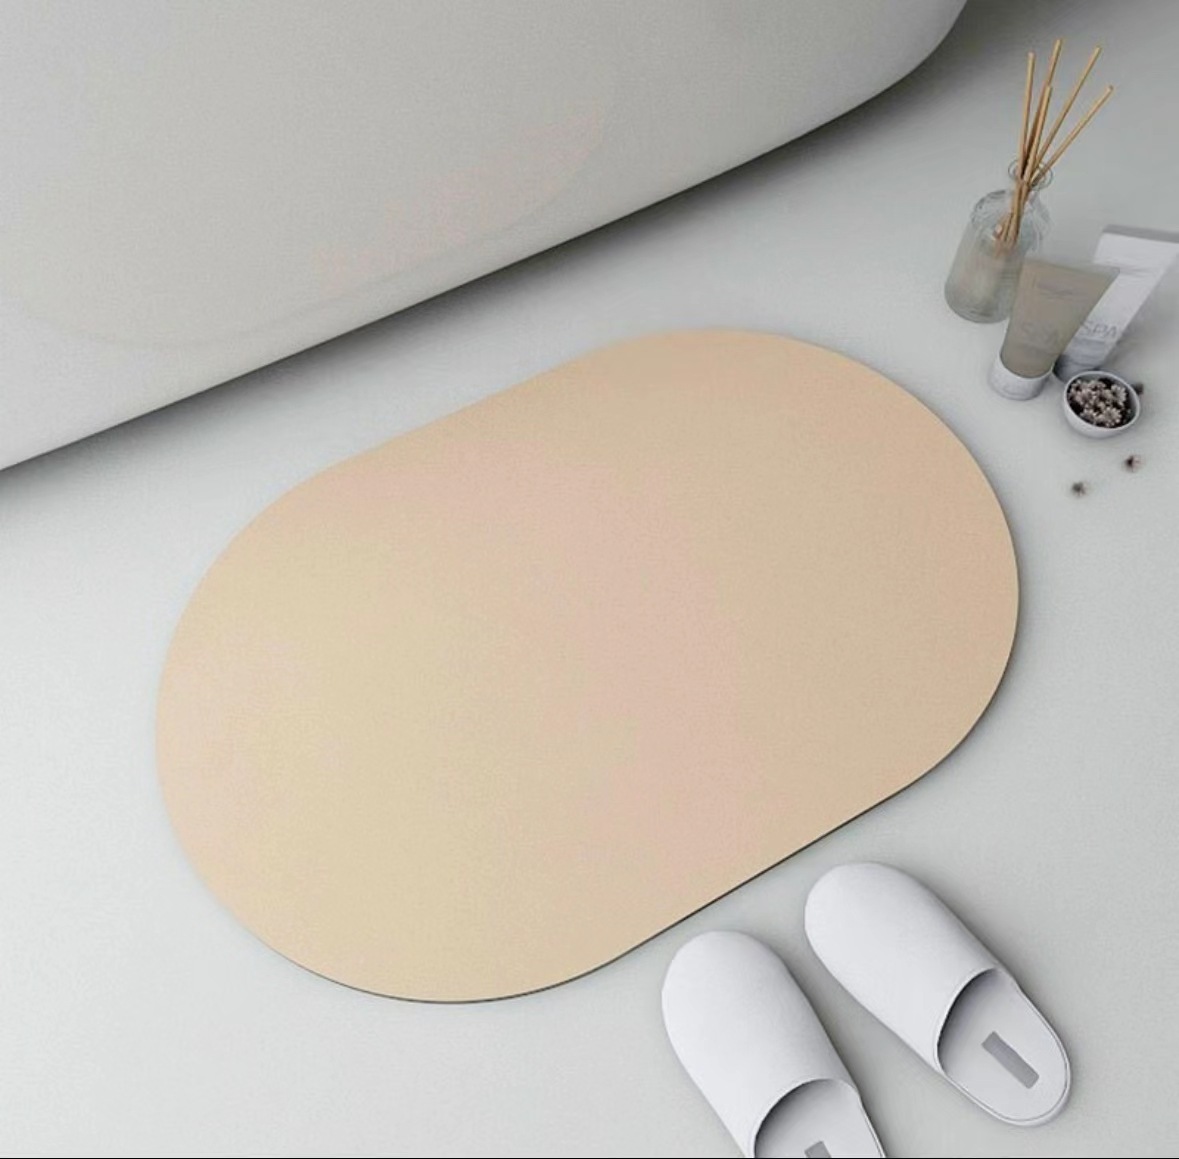 Diatom Mud Bathroom Rug Super Absorbent Floor Mat Quick-Drying Non-Slip Natural Rubber Door Mat Bathmat Rugs